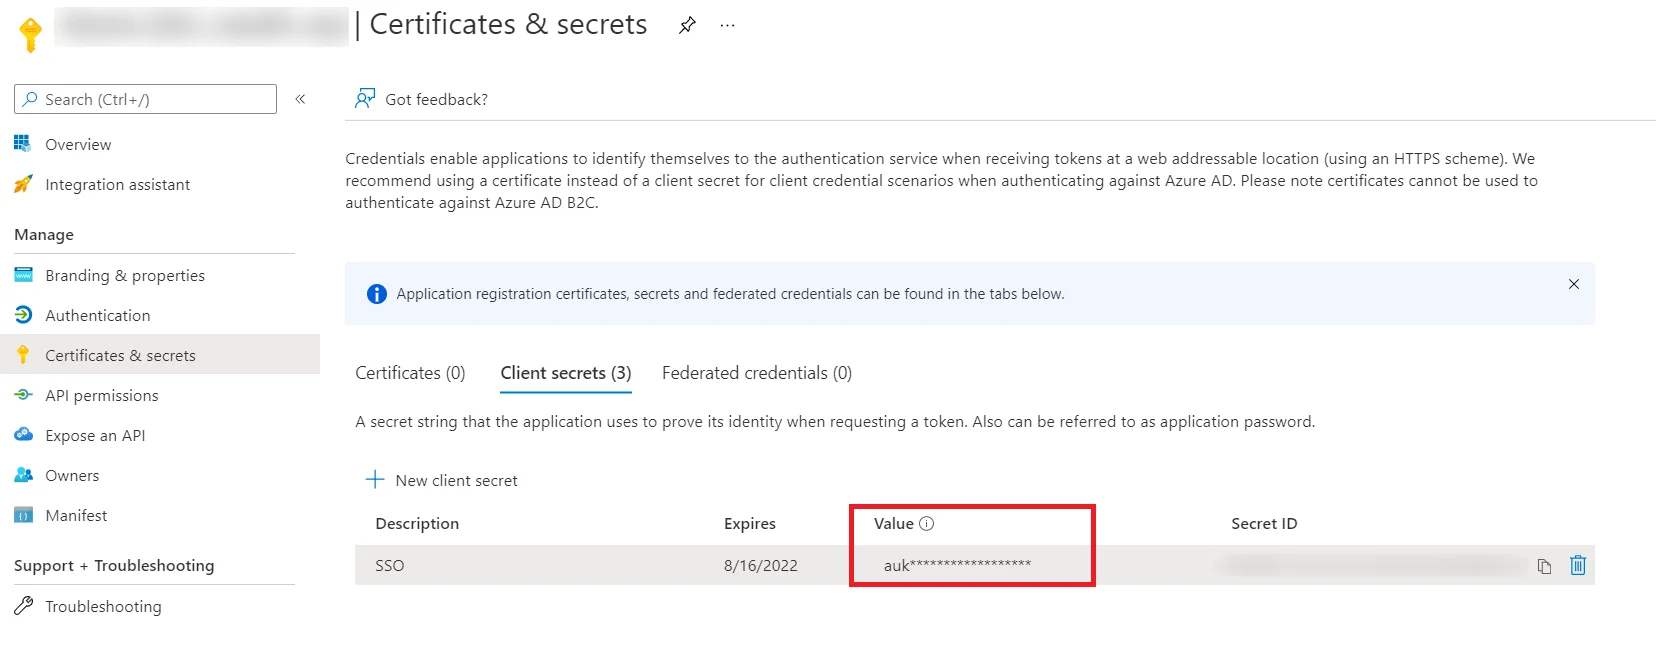 Office365 / Outlook Single Sign-on (SSO) - Secret-Key-2